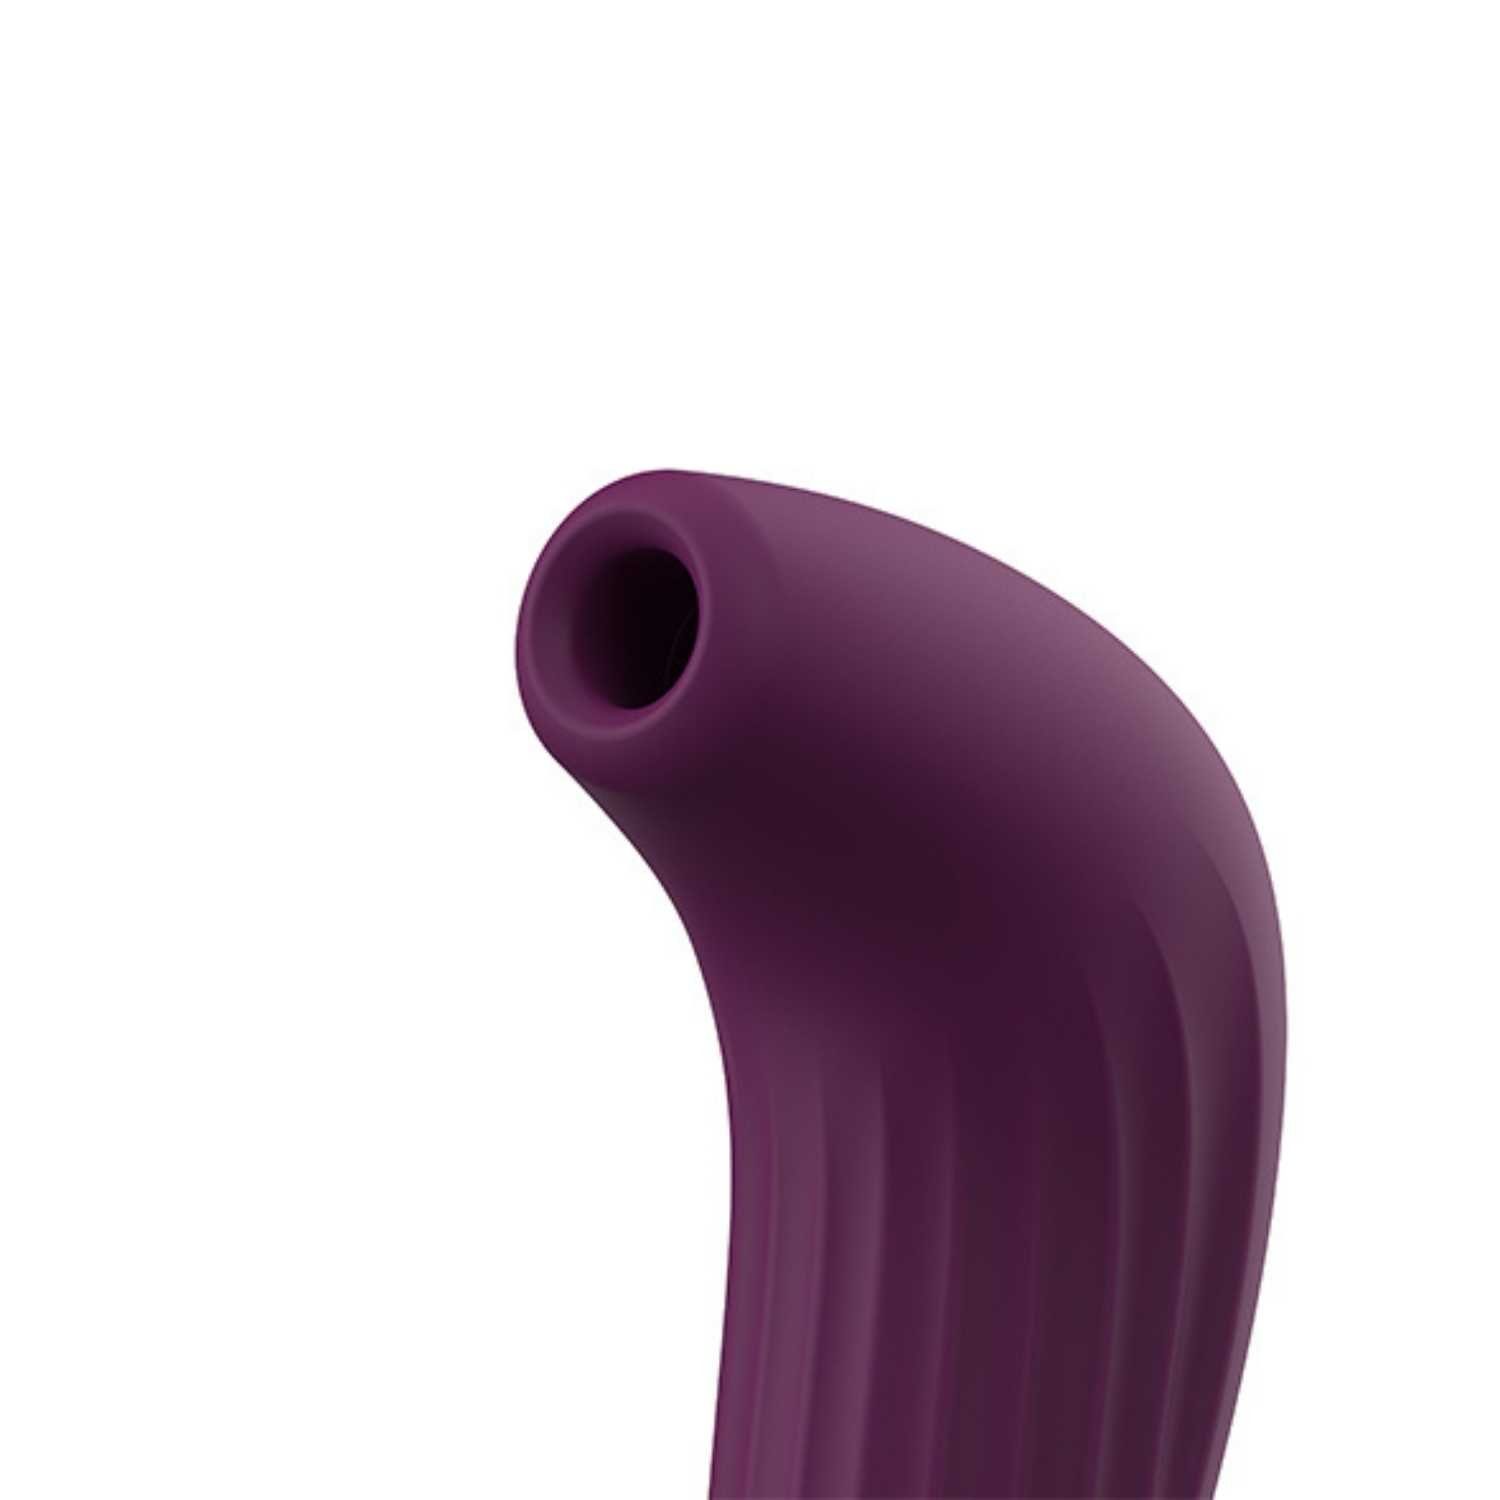 Luftdruck-Vibrator Klitoris-Stimulator Pulse Intensitäten Svakom Union violett, - 5 Svakom